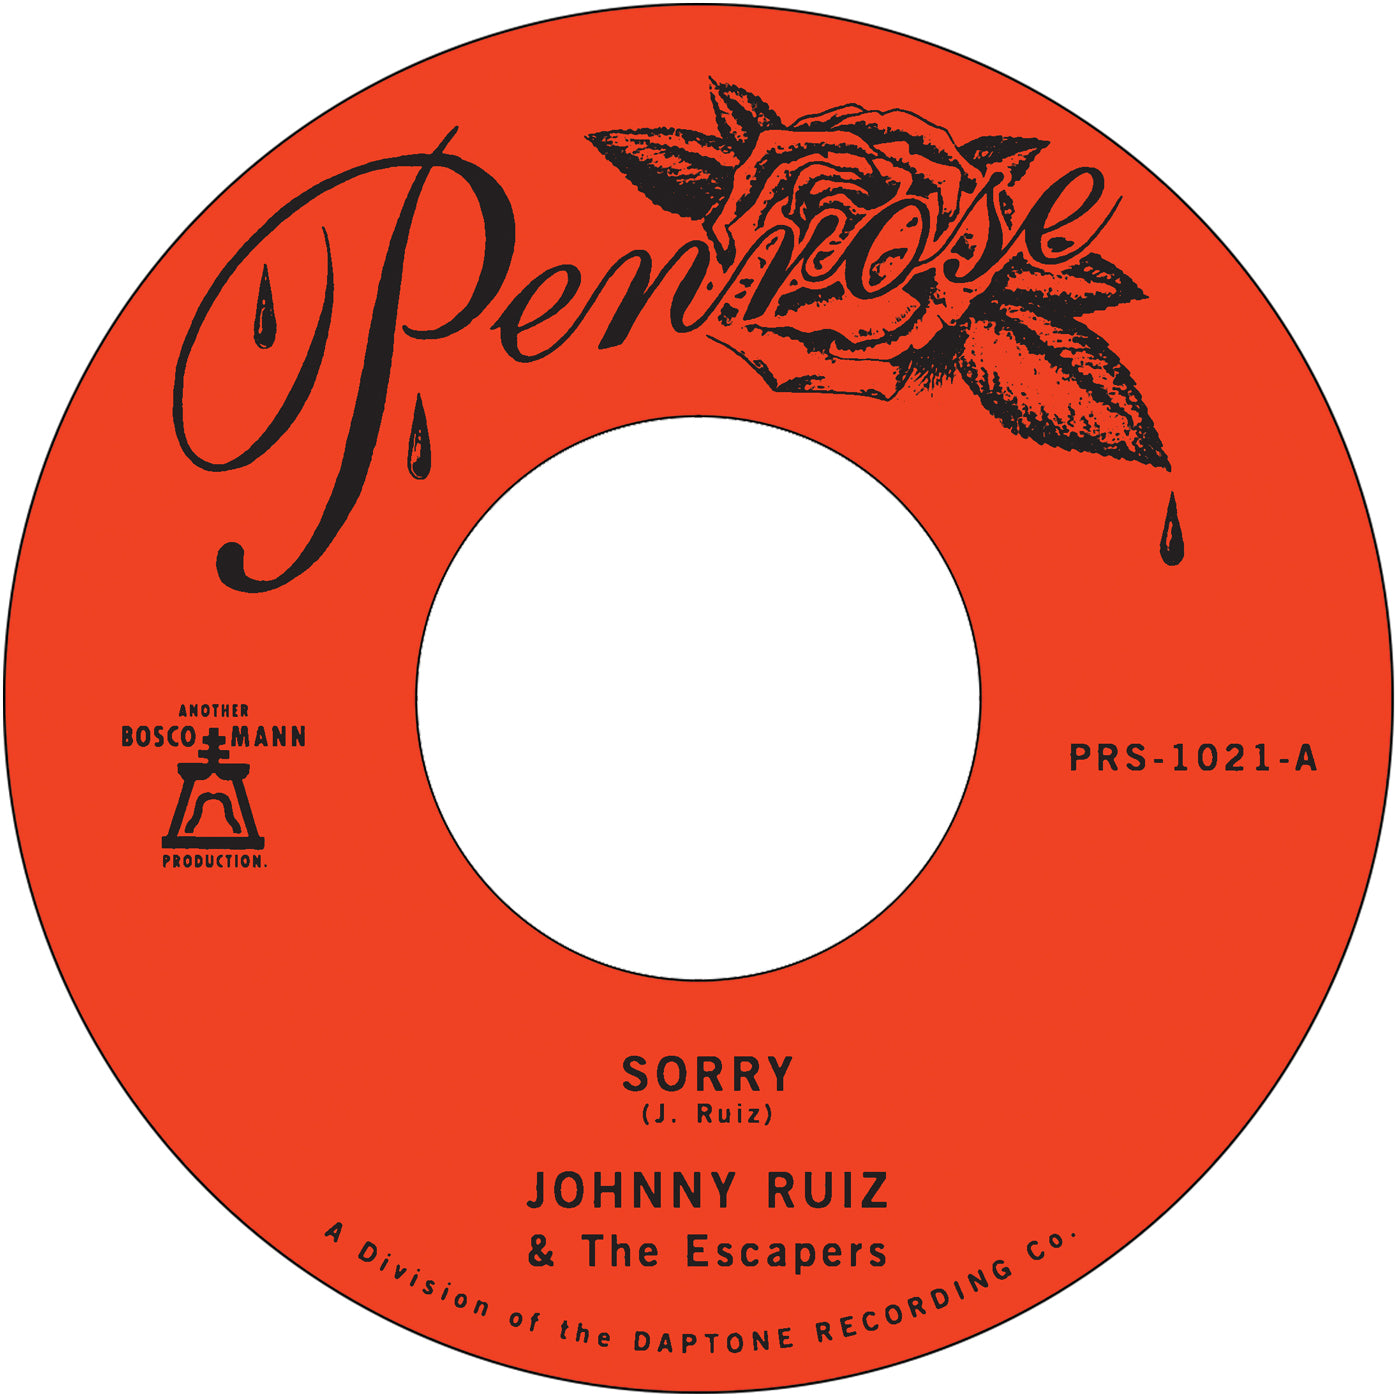 Johnny Ruiz & the Escapers "Sorry" / "Prettiest Girl"